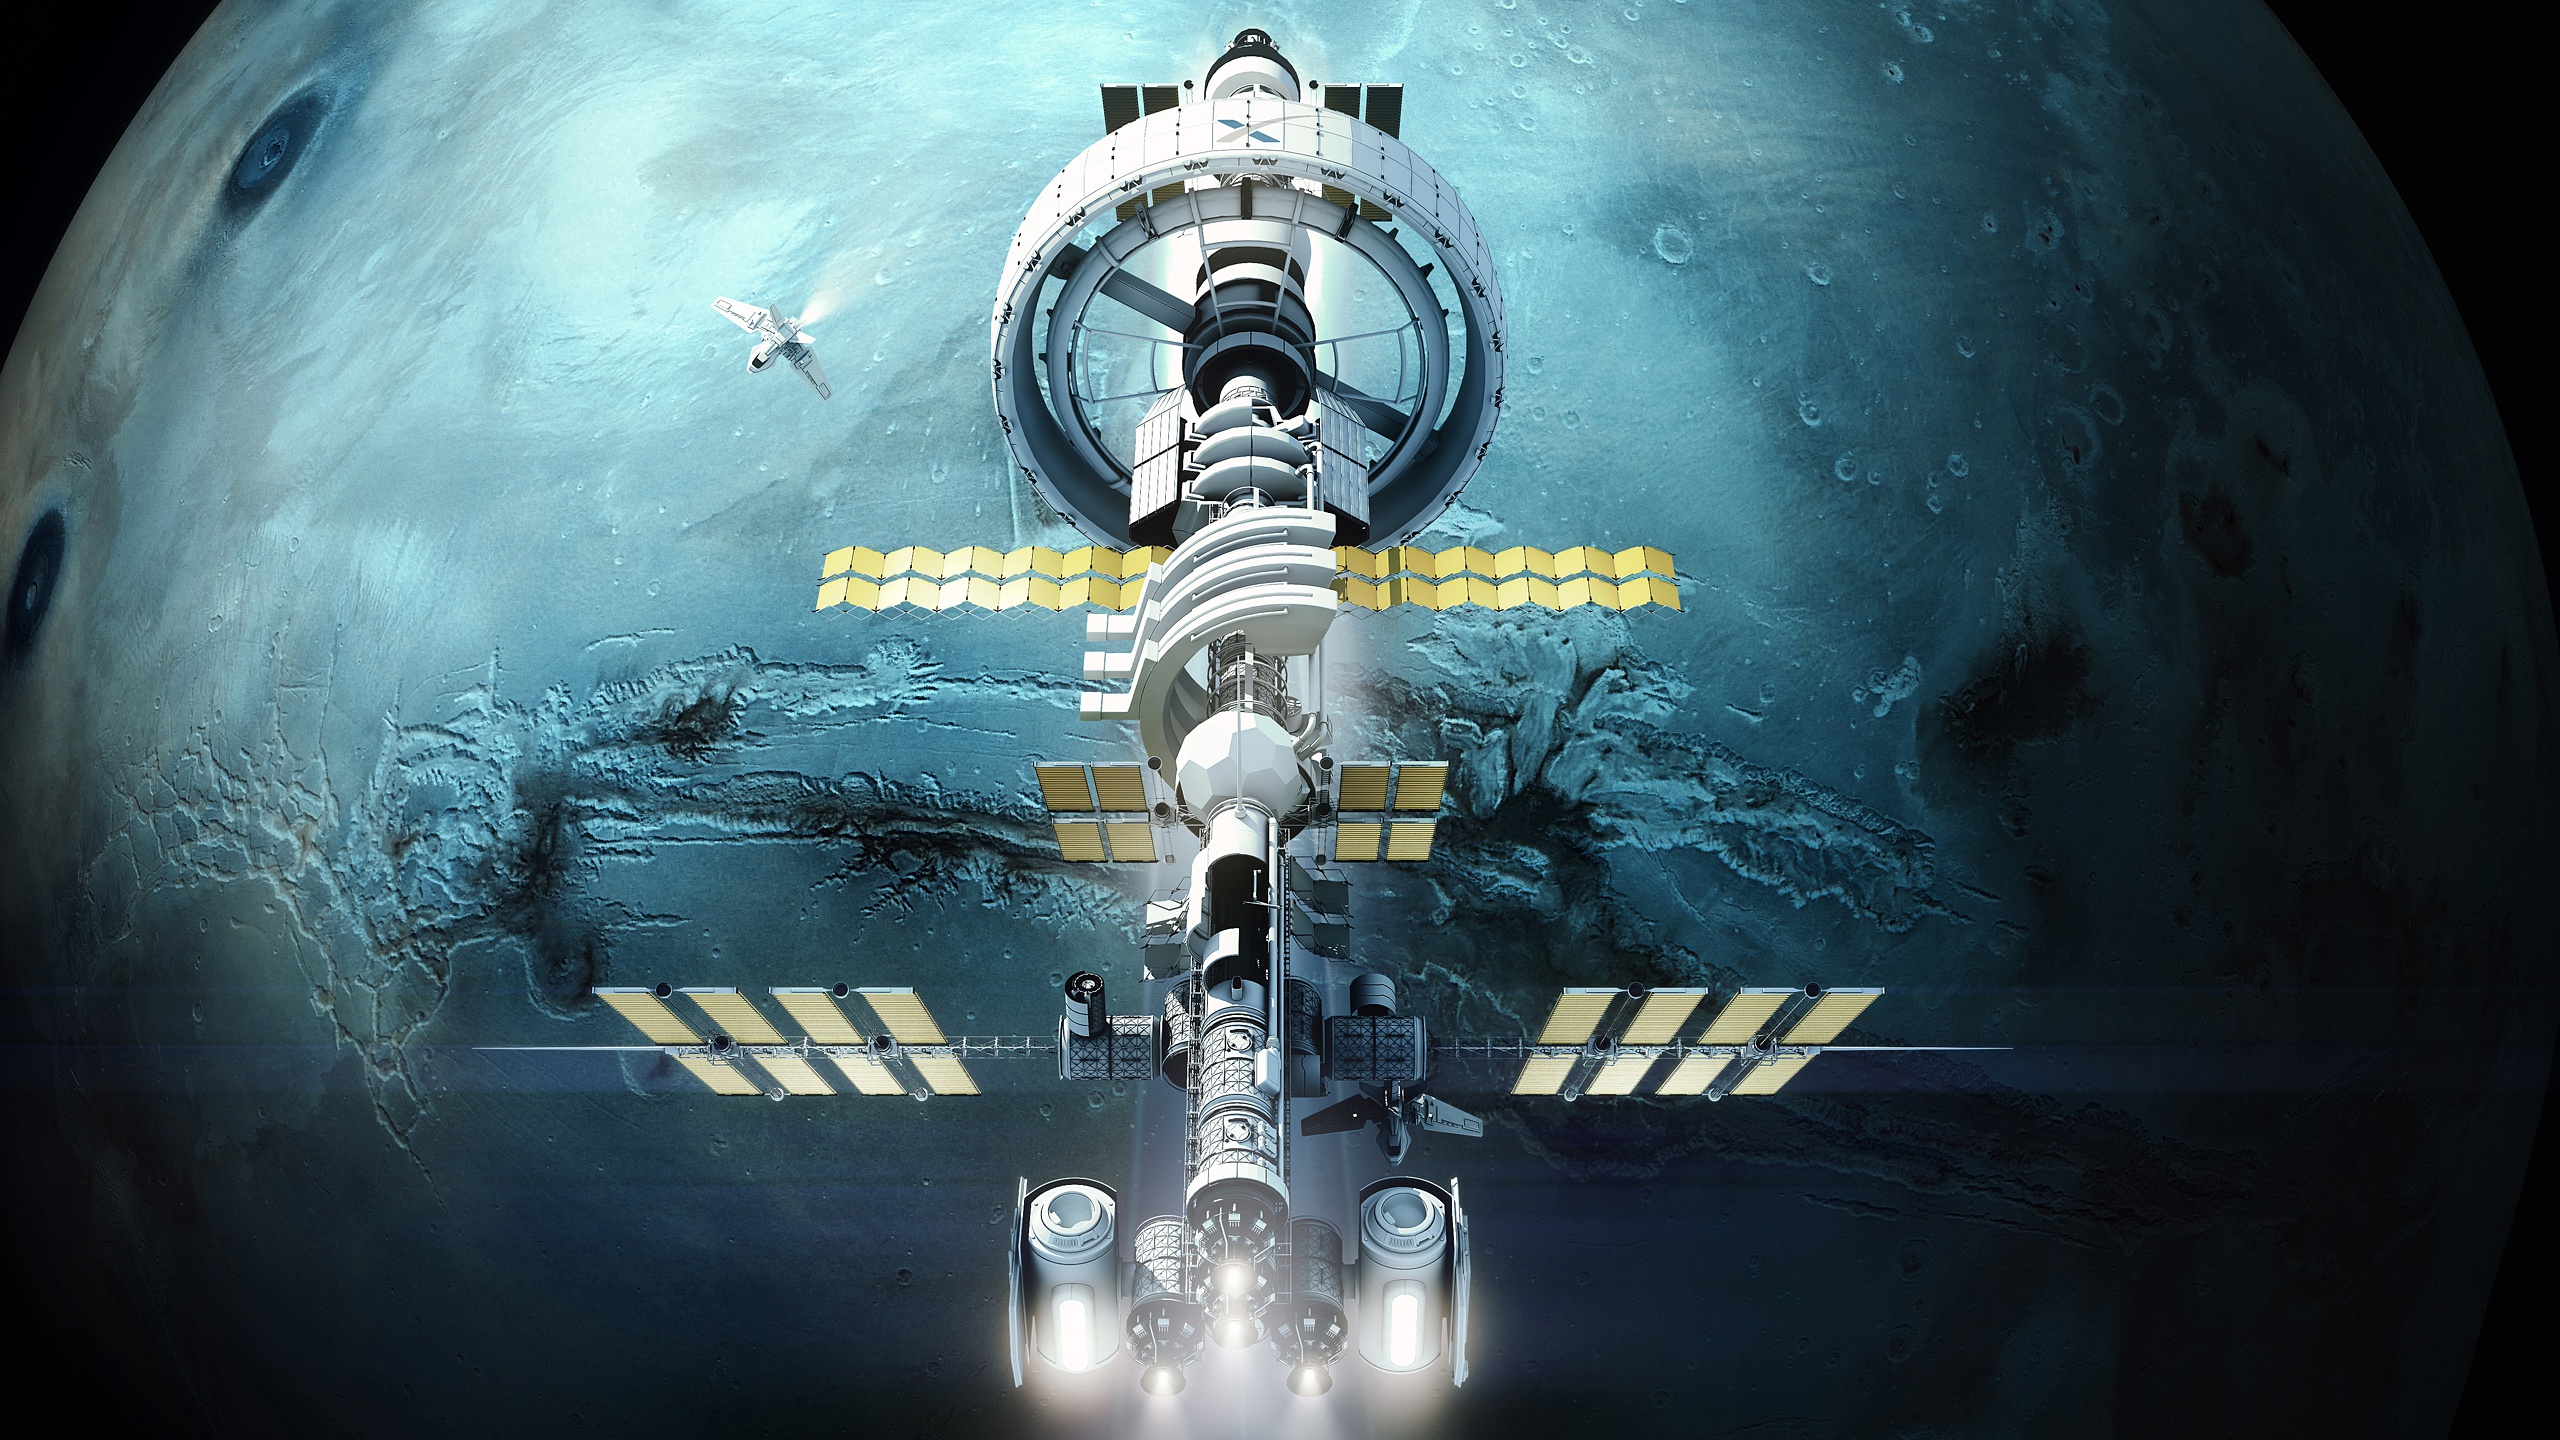 Planet Space Futuristic Science Fiction Spacestation Digital Art Cyan 2560x1440